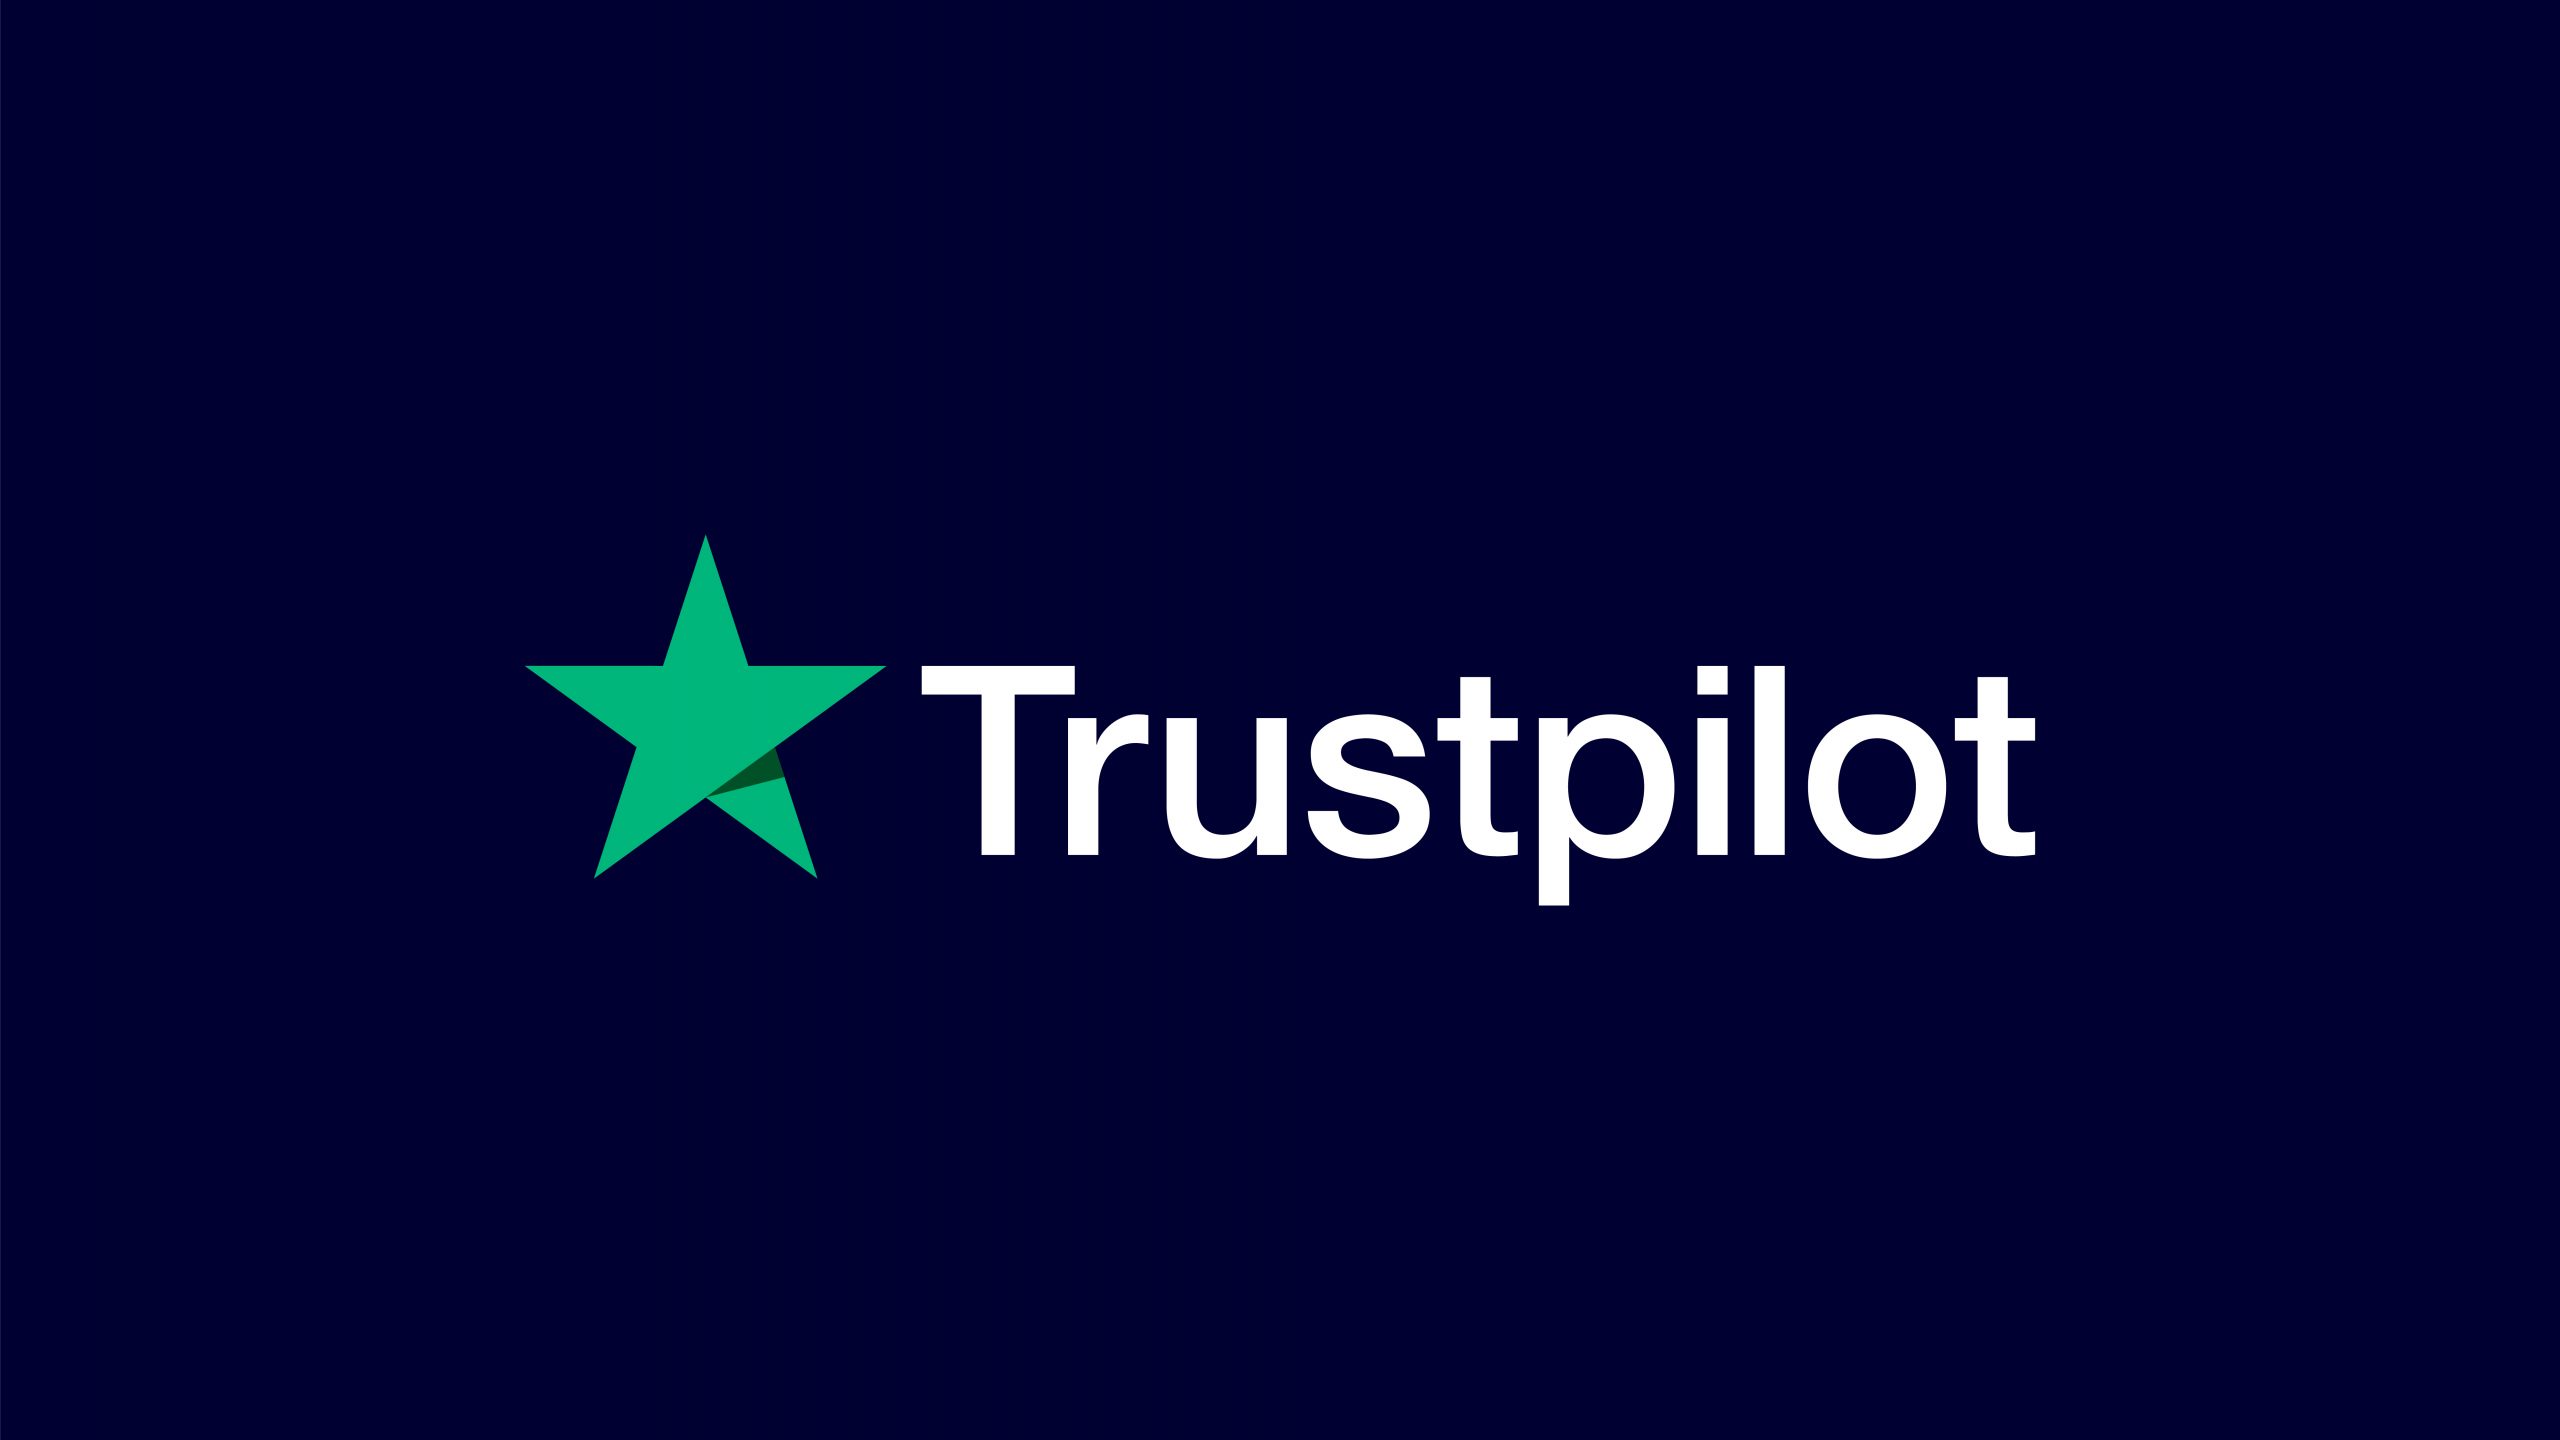 Report Trasparenza, Trustpilot ha eliminato oltre due milioni di recensioni false thumbnail